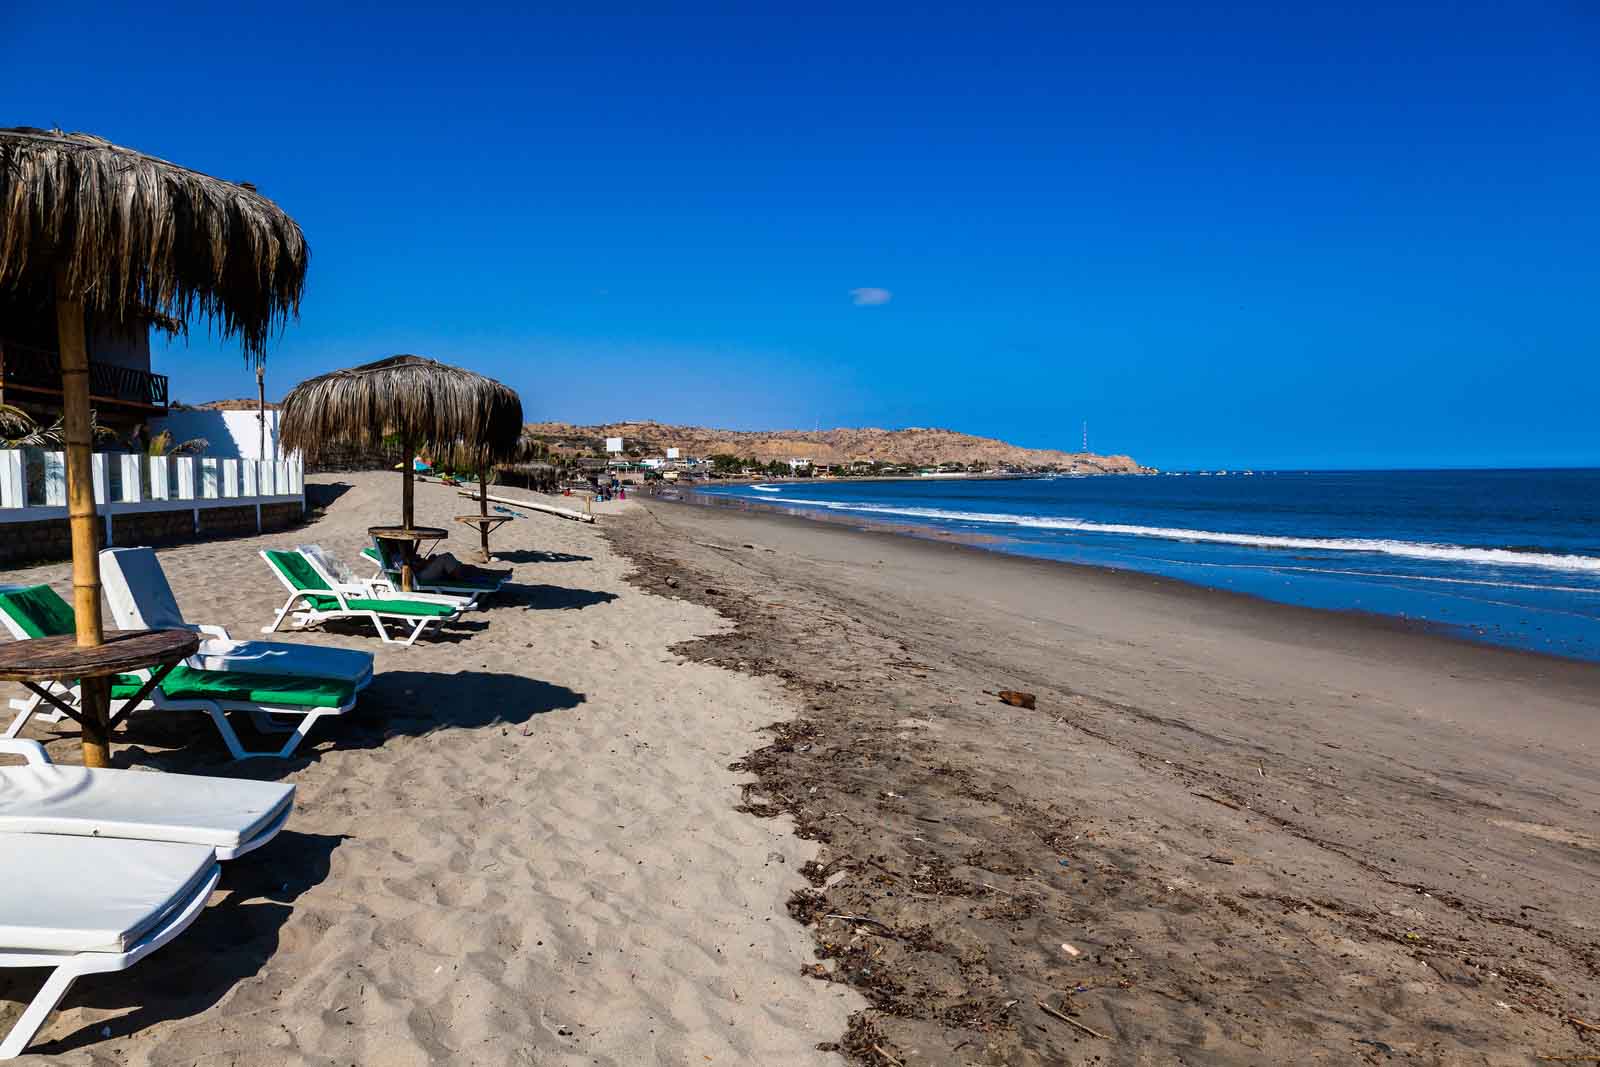 Mancora beach north of Peru